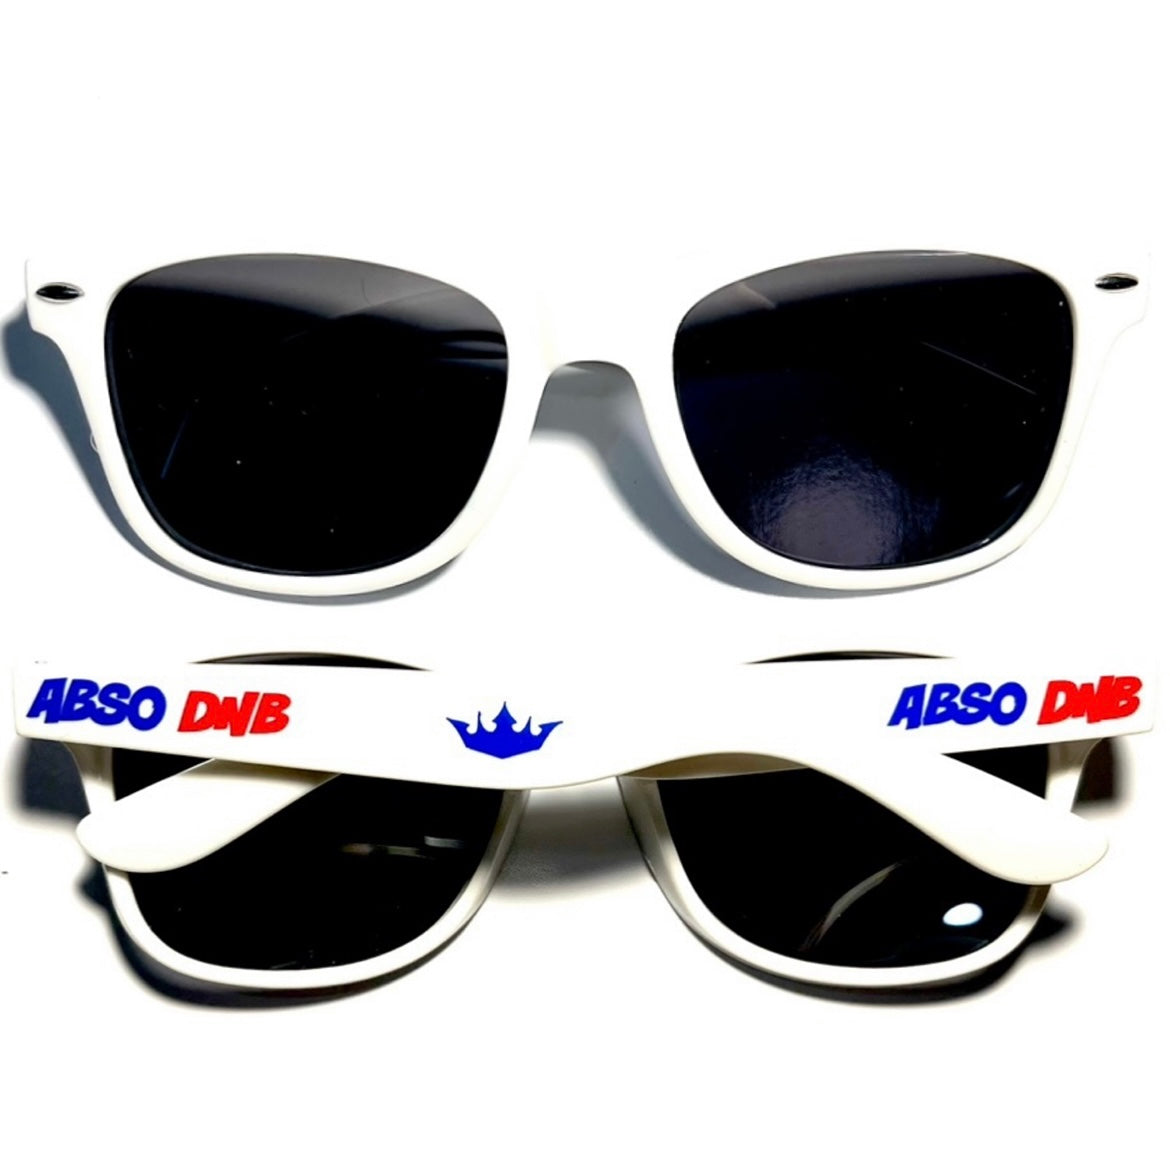 ABSO DNB Sunglasses